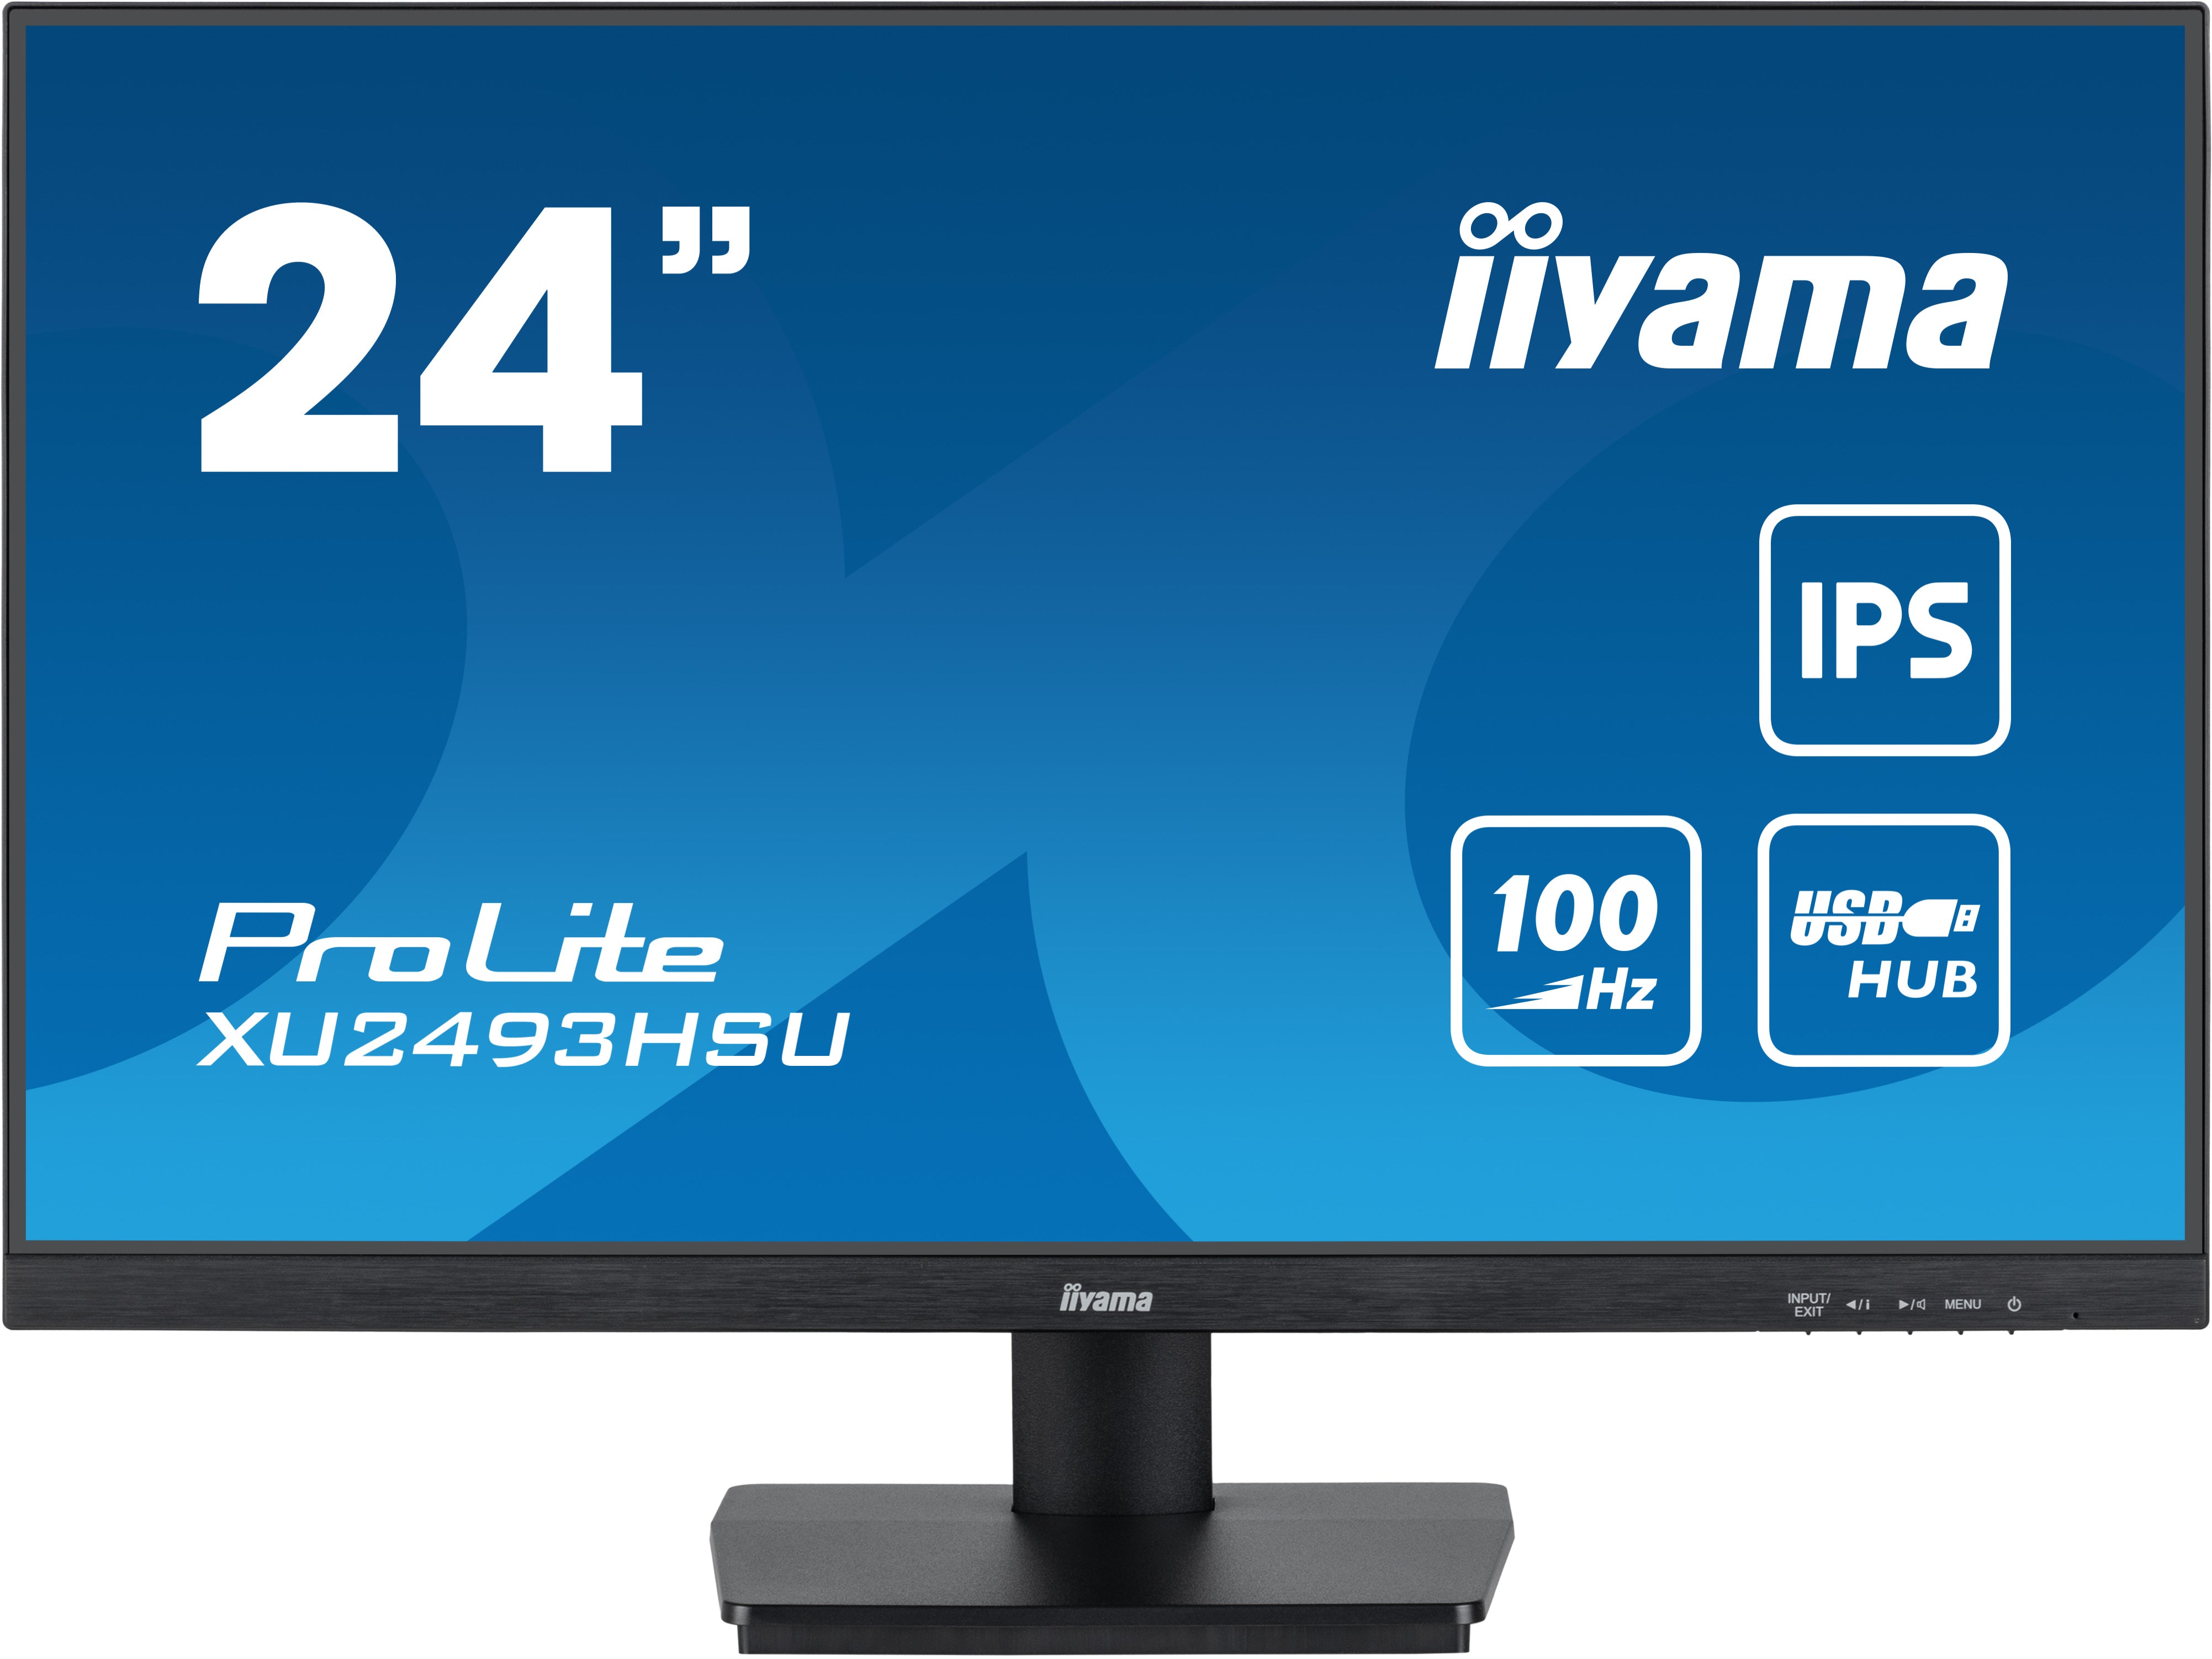 iiyama ProLite XU2493HSU-B6 24” IPS Display with USB hub and 100Hz refresh rate